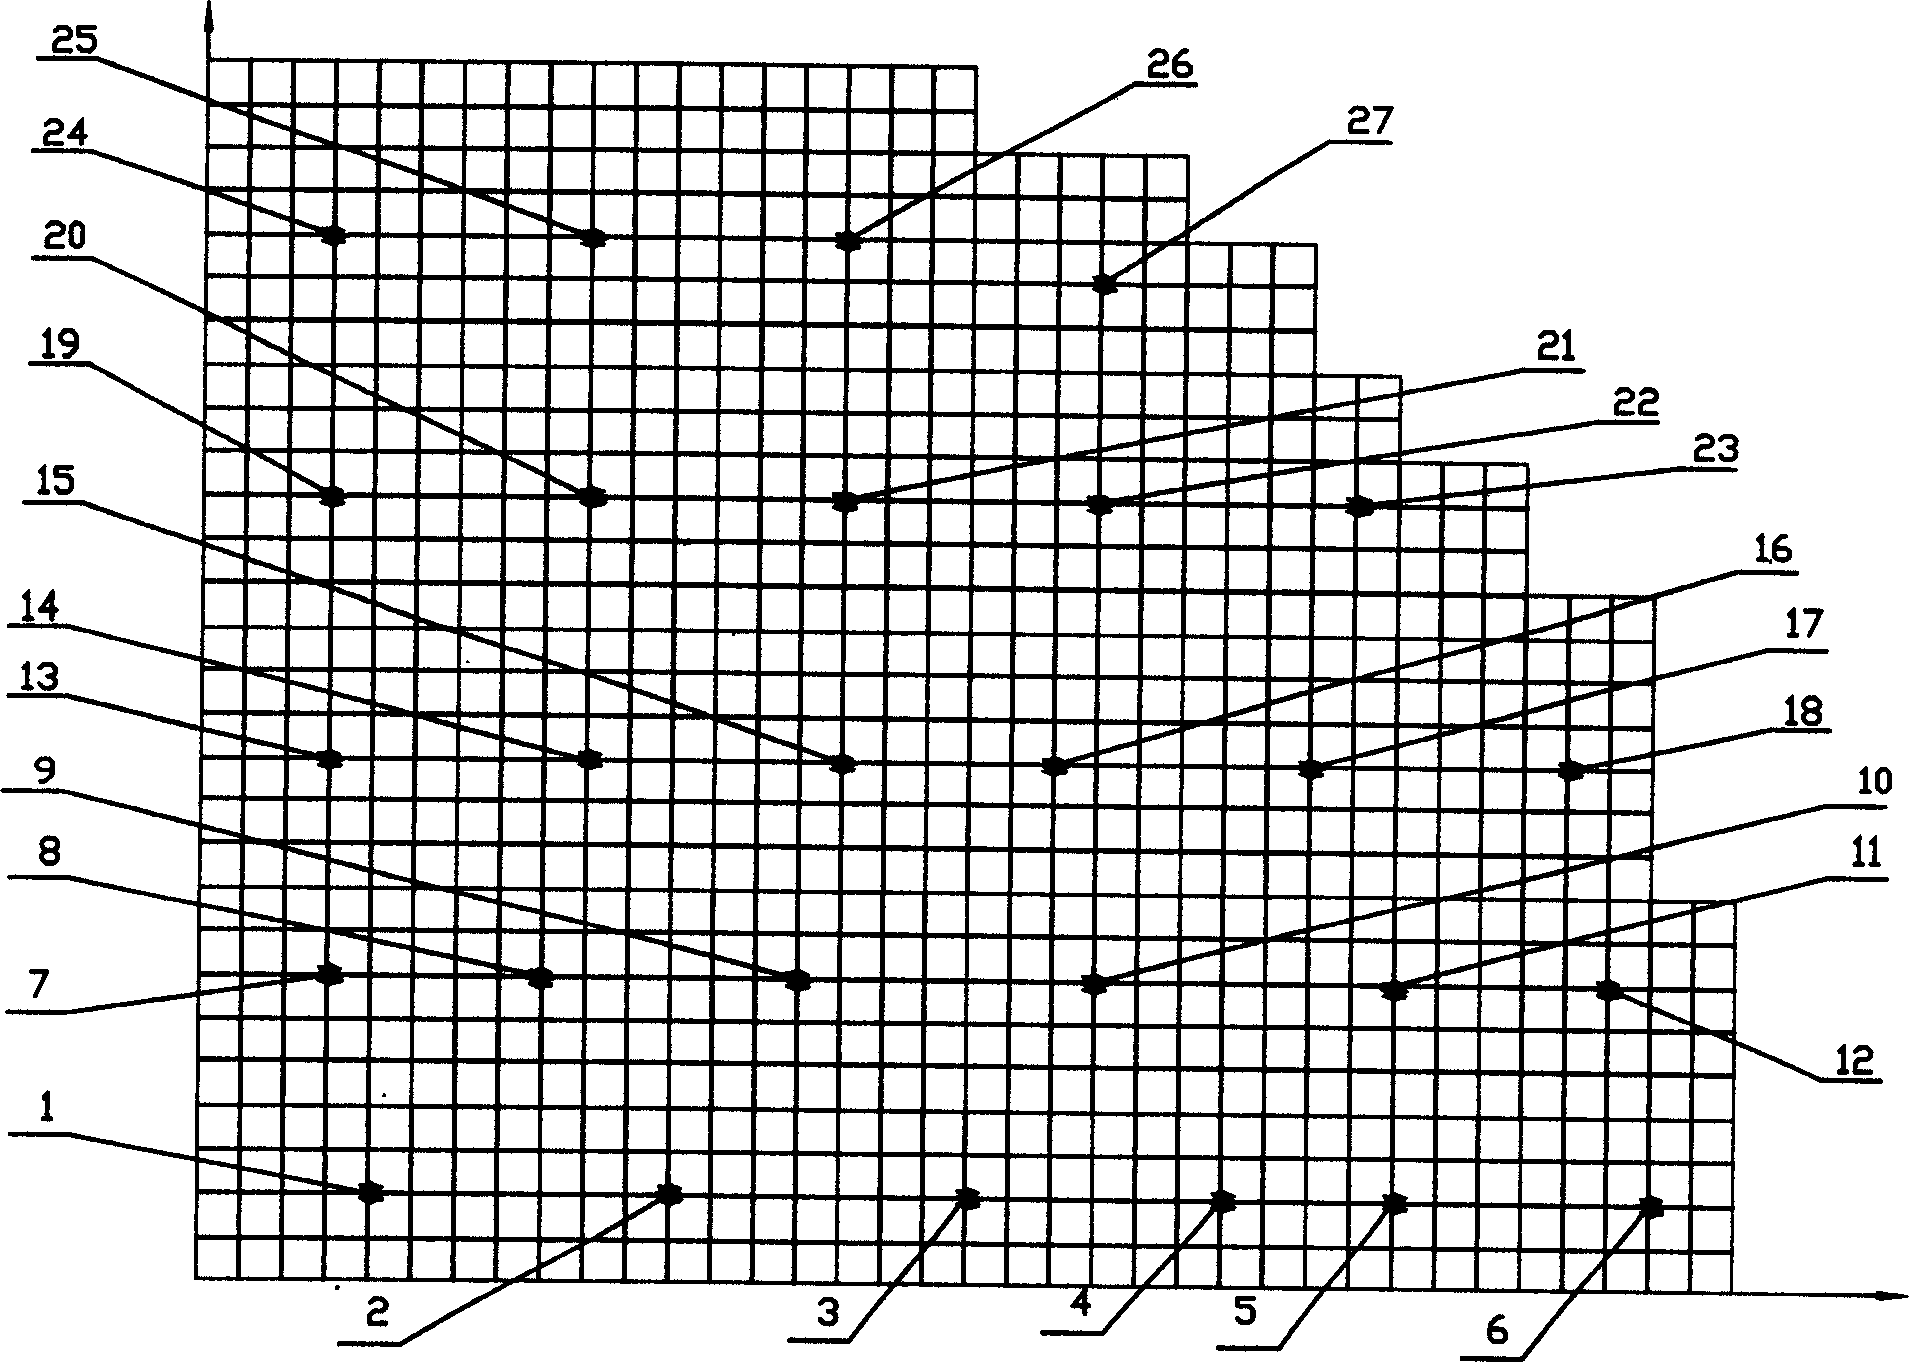 Non-periodic-arranged flat slot radiation array face